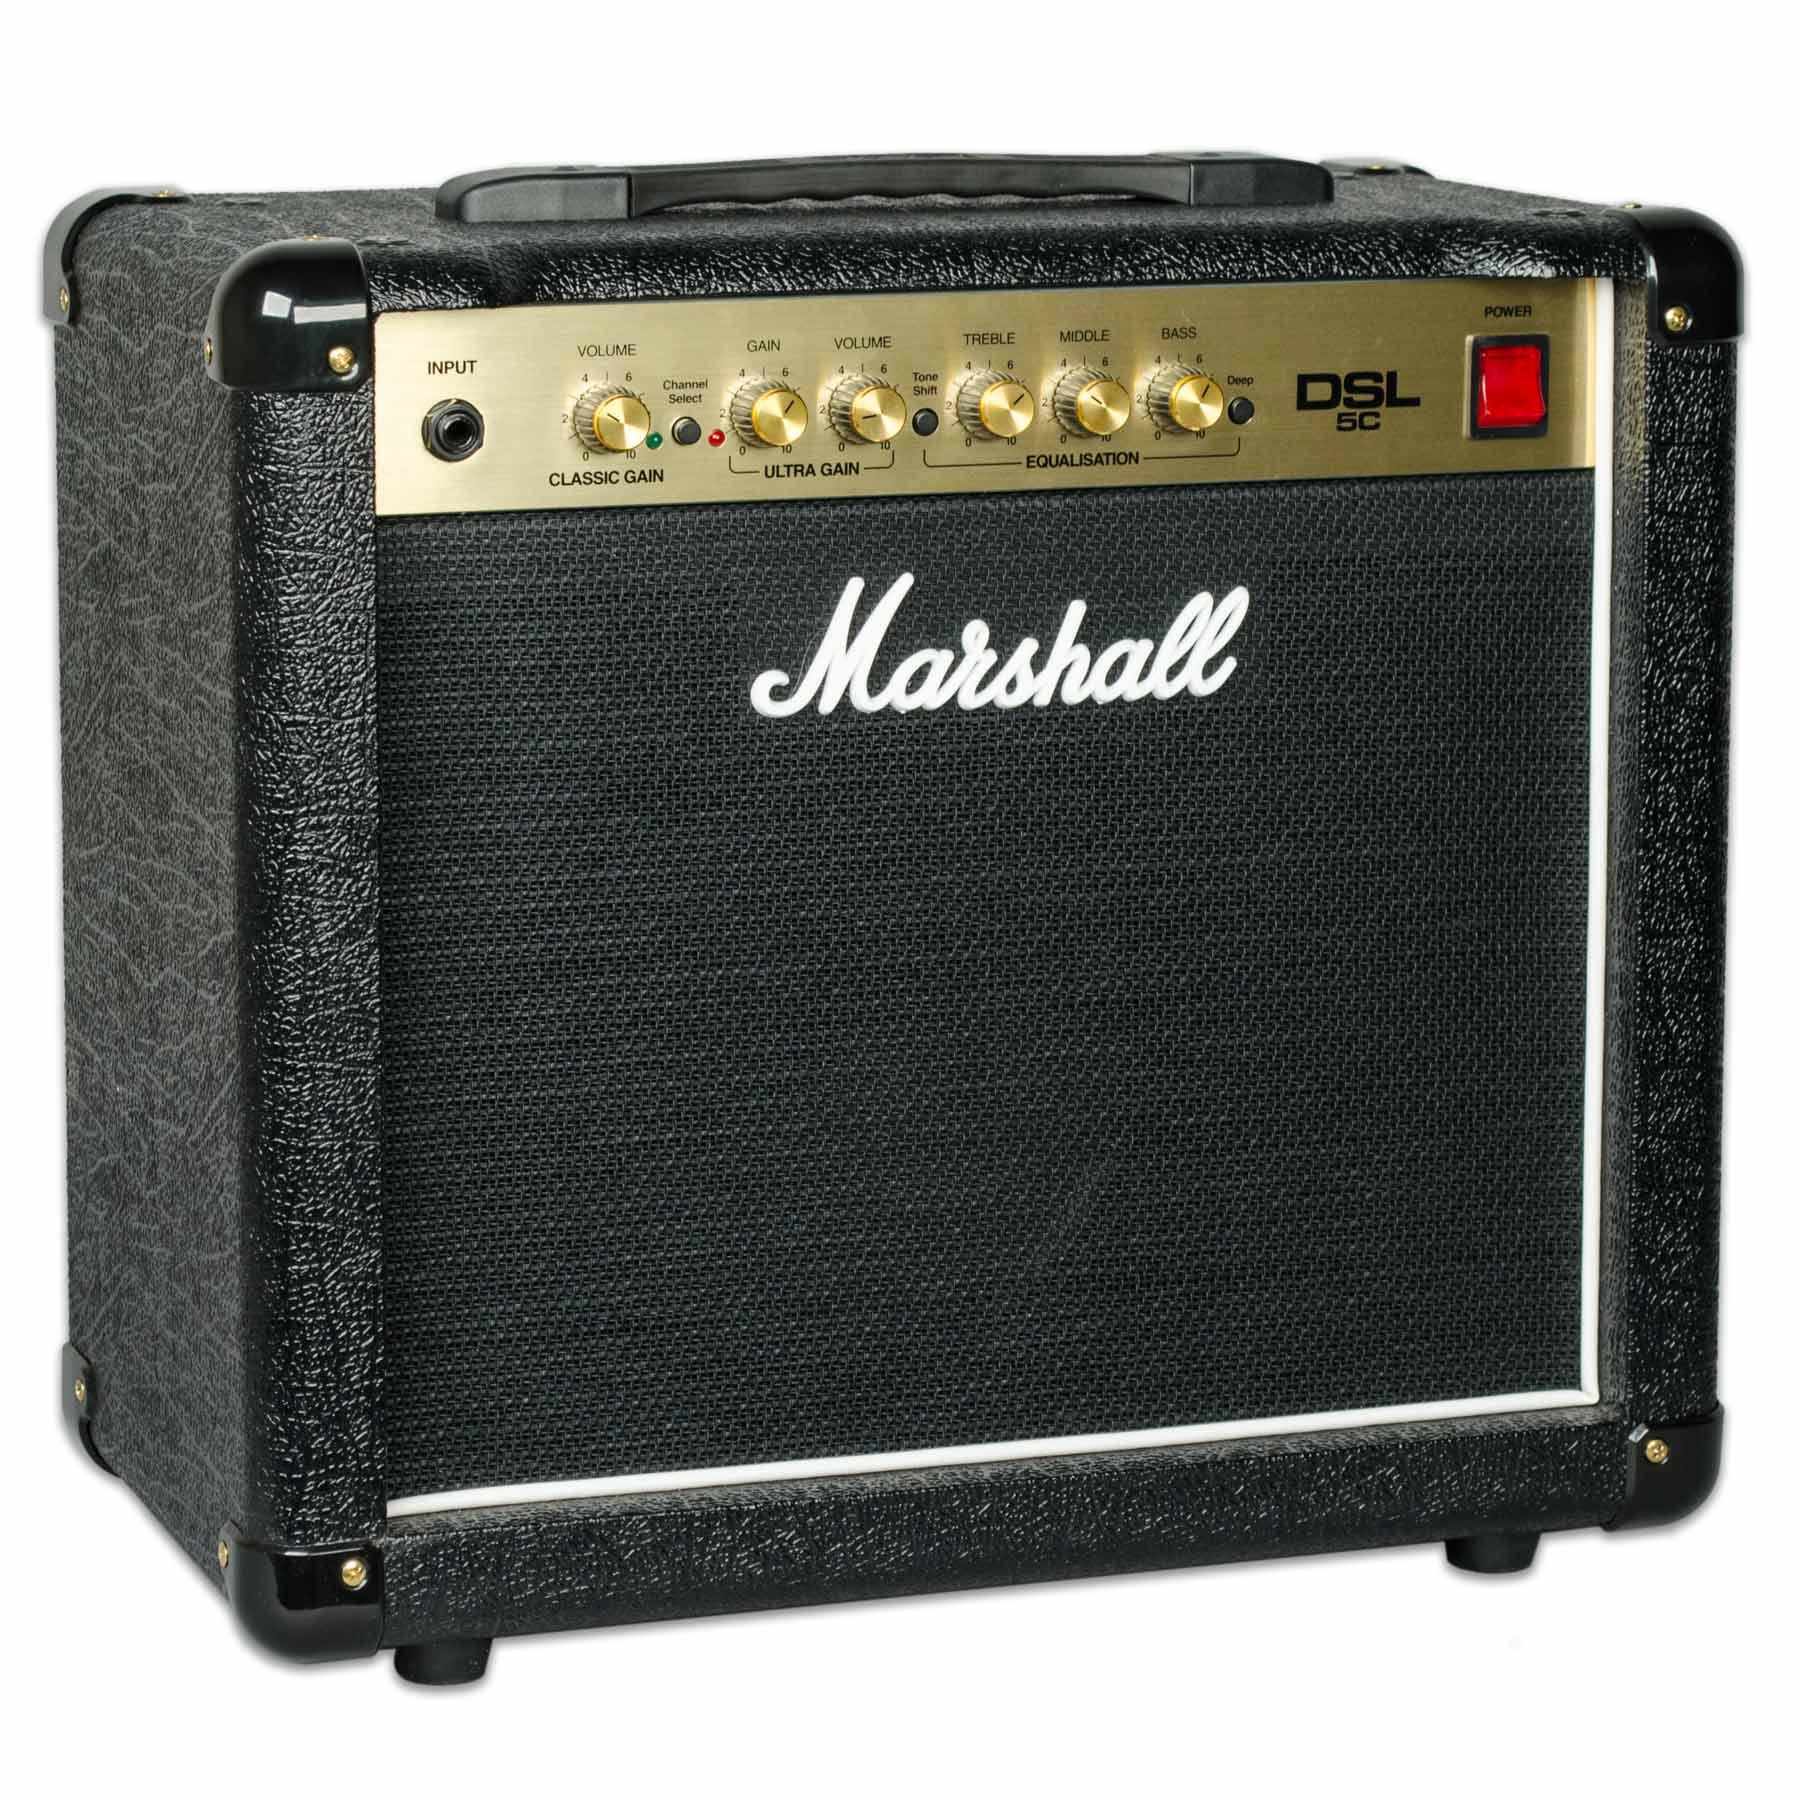 MARSHALL DSL5C GUITAR AMPLIFIER | Stang Guitars